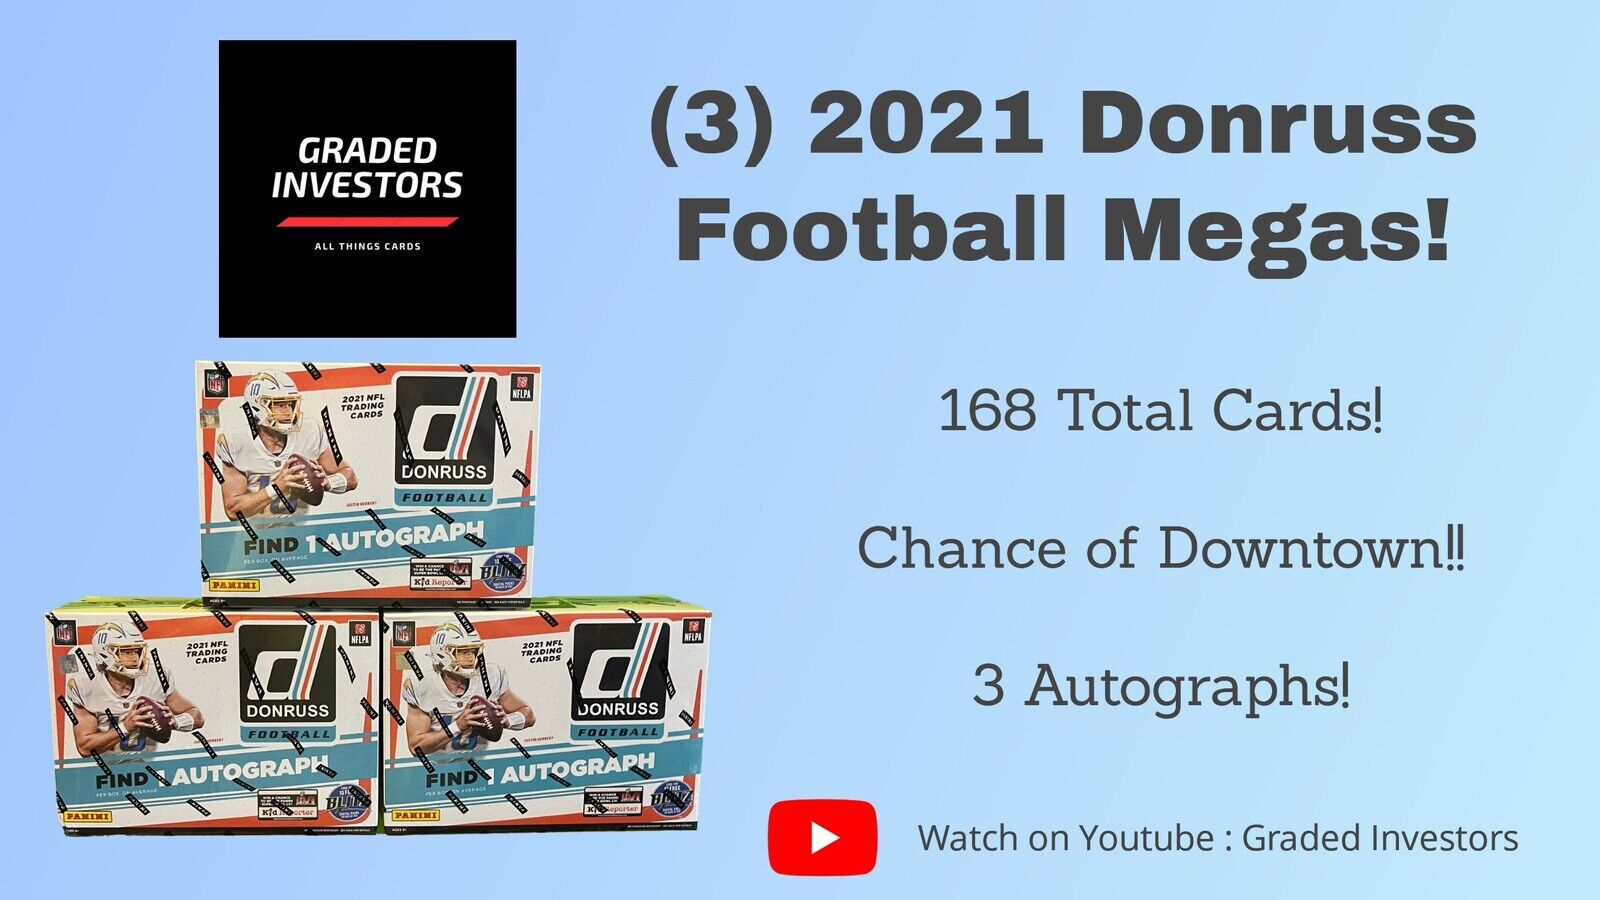 Jacksonville Jaguars (3) 2021 Donruss Football Sealed Mega Boxes Live Break